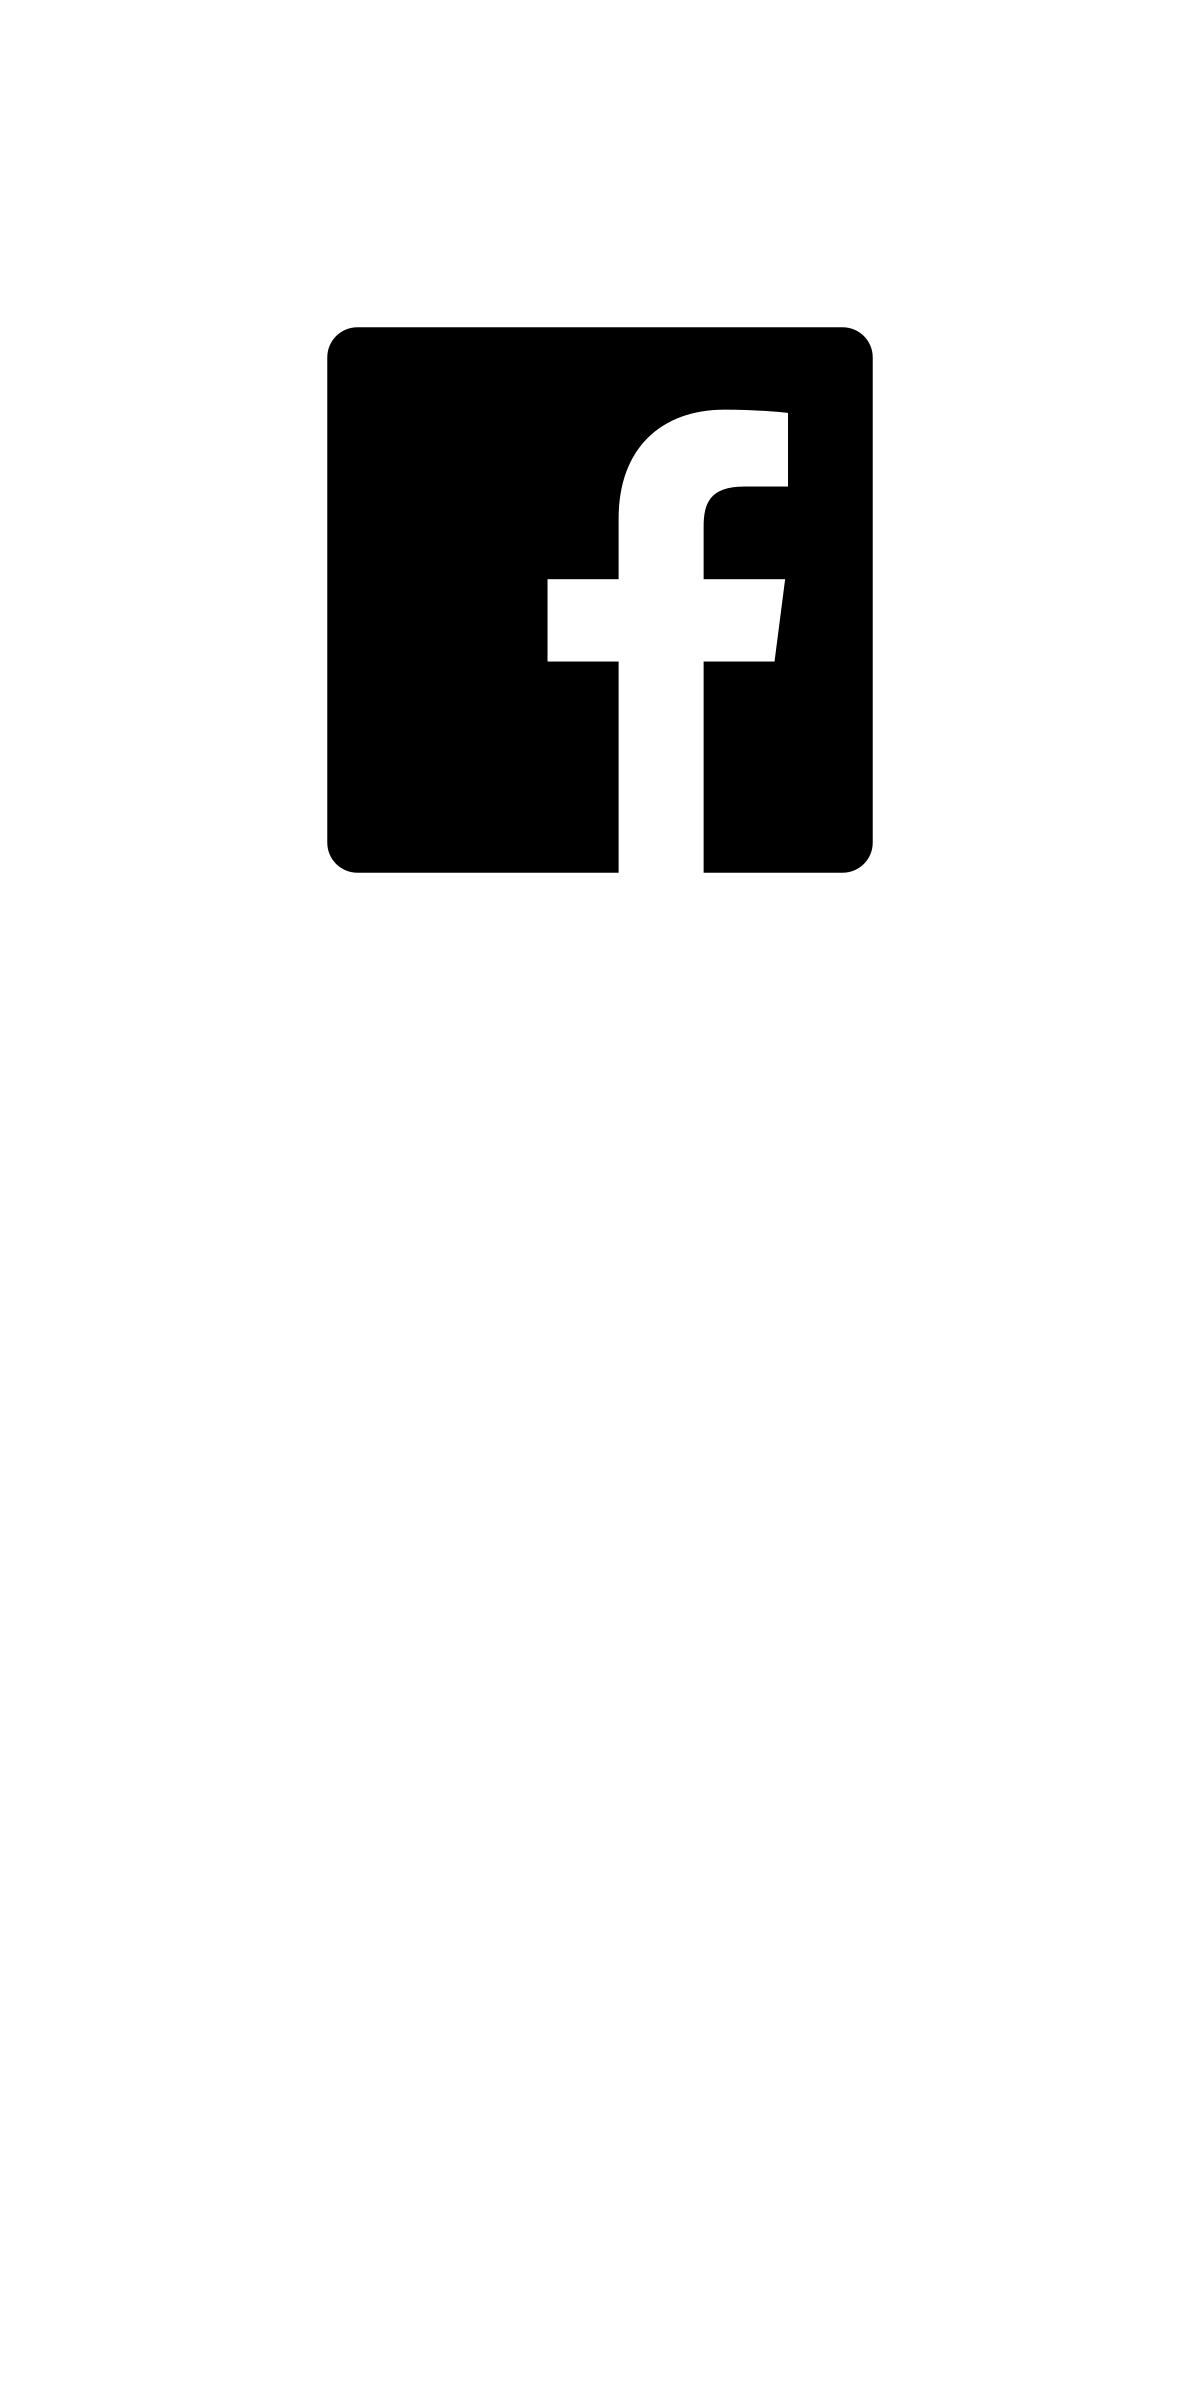 Facebook Logo Black And White PNG Transparent Image